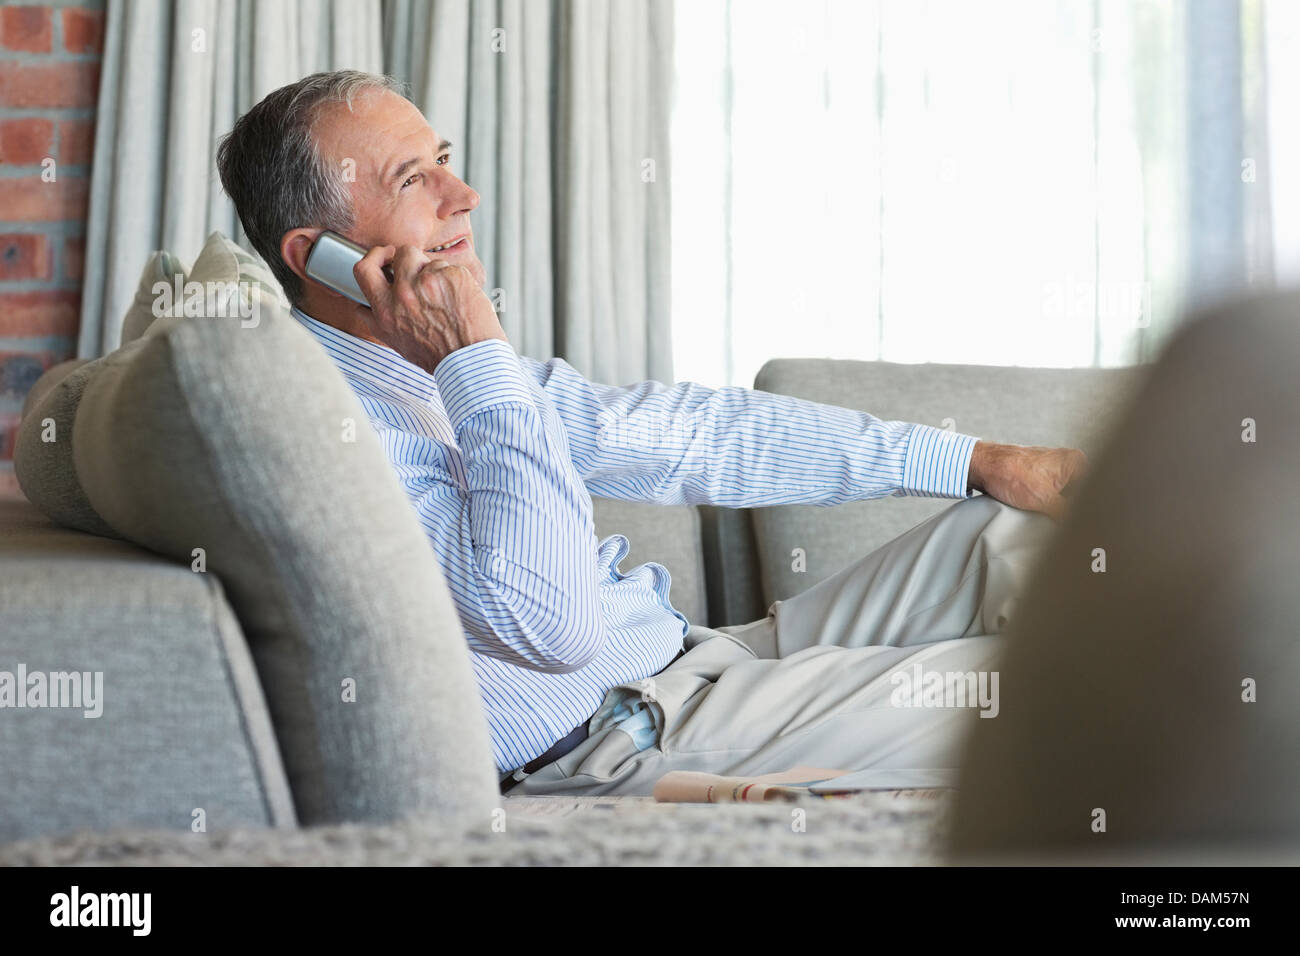 Older man talking on cell phone on sofa Stock Photo